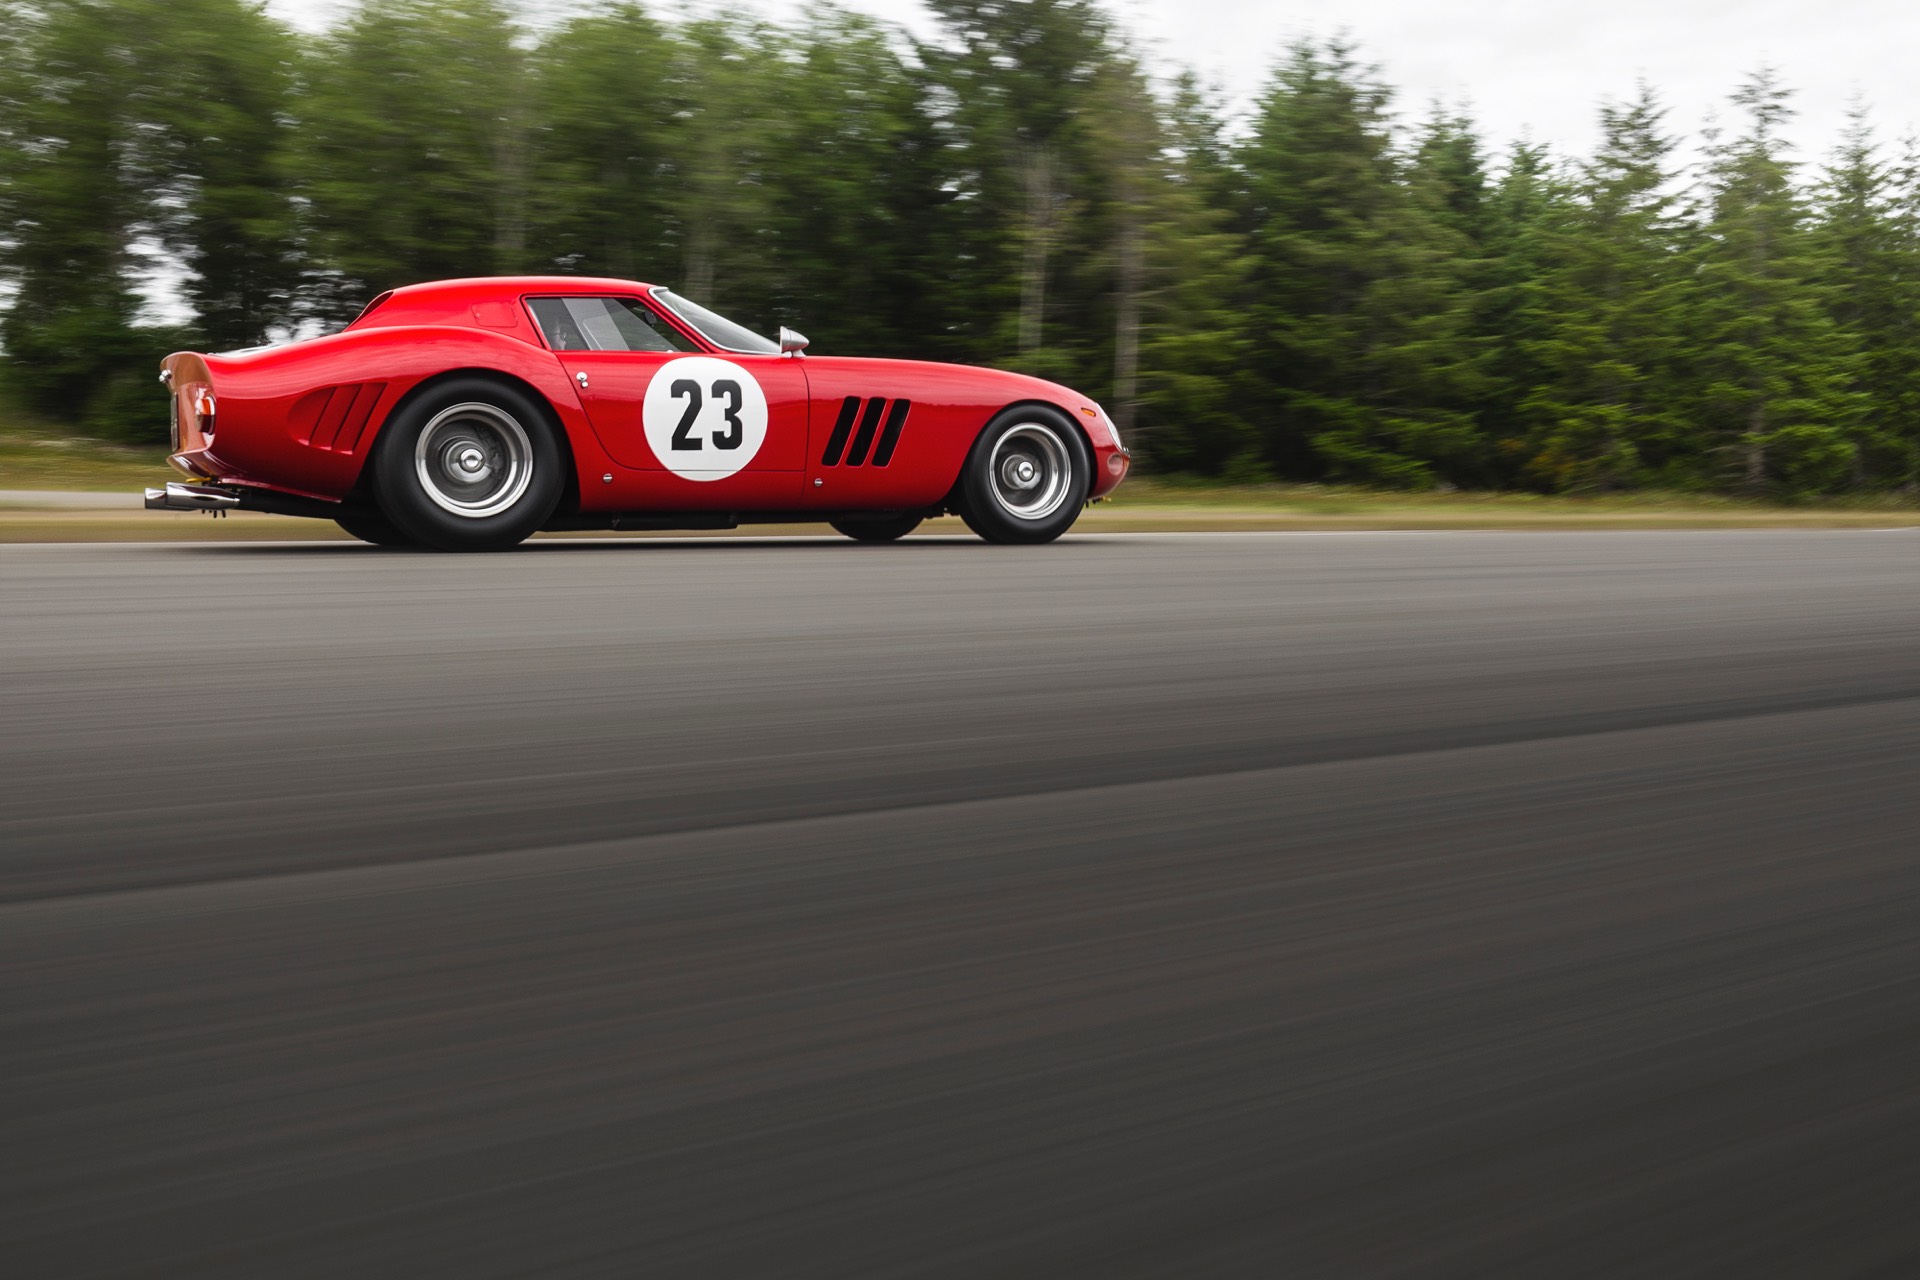 Ferrari 250 GTO RM Sothebys Tracking